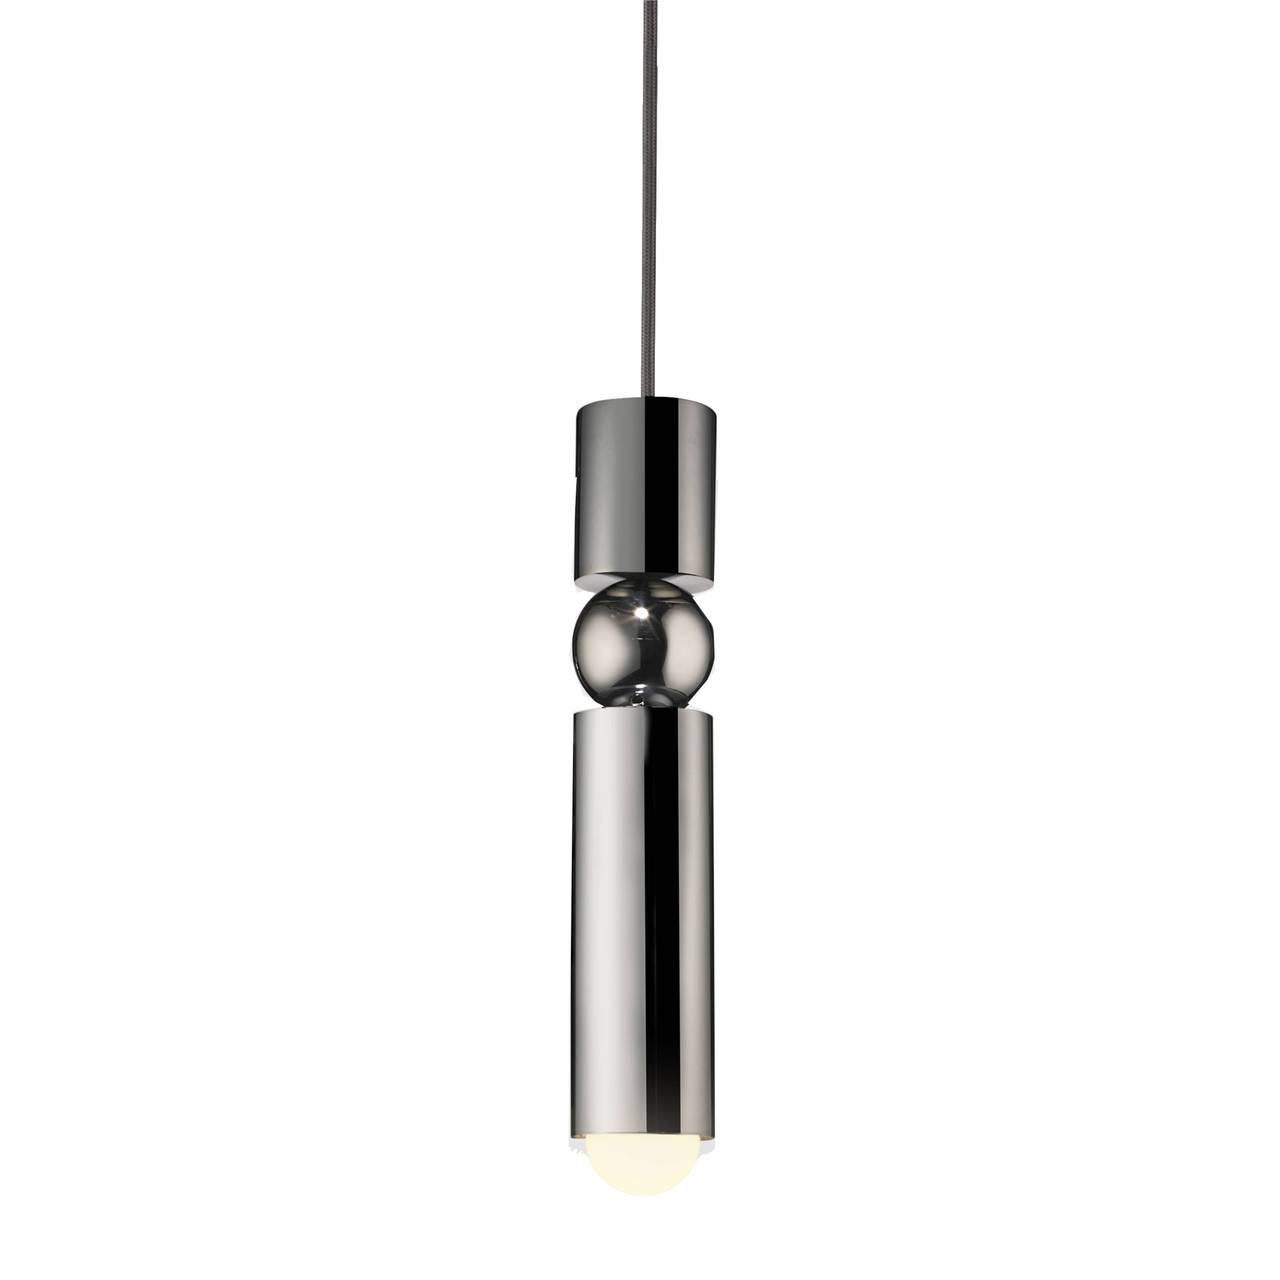 Lee Broom - Fulcrum light Hanglamp